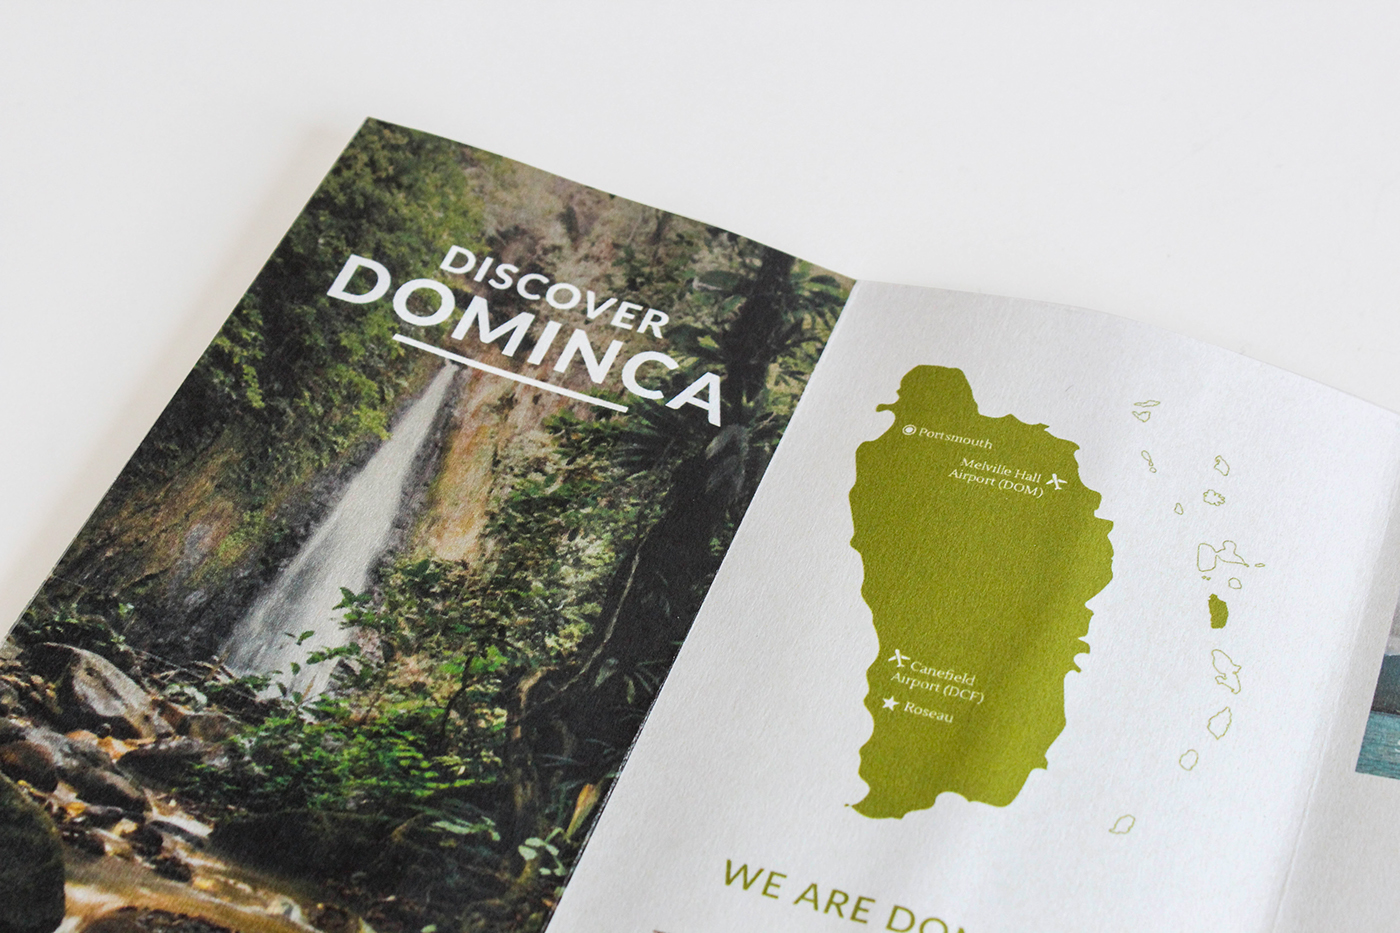 Web Design  brochure design Travel Island Nature Dominica branding 